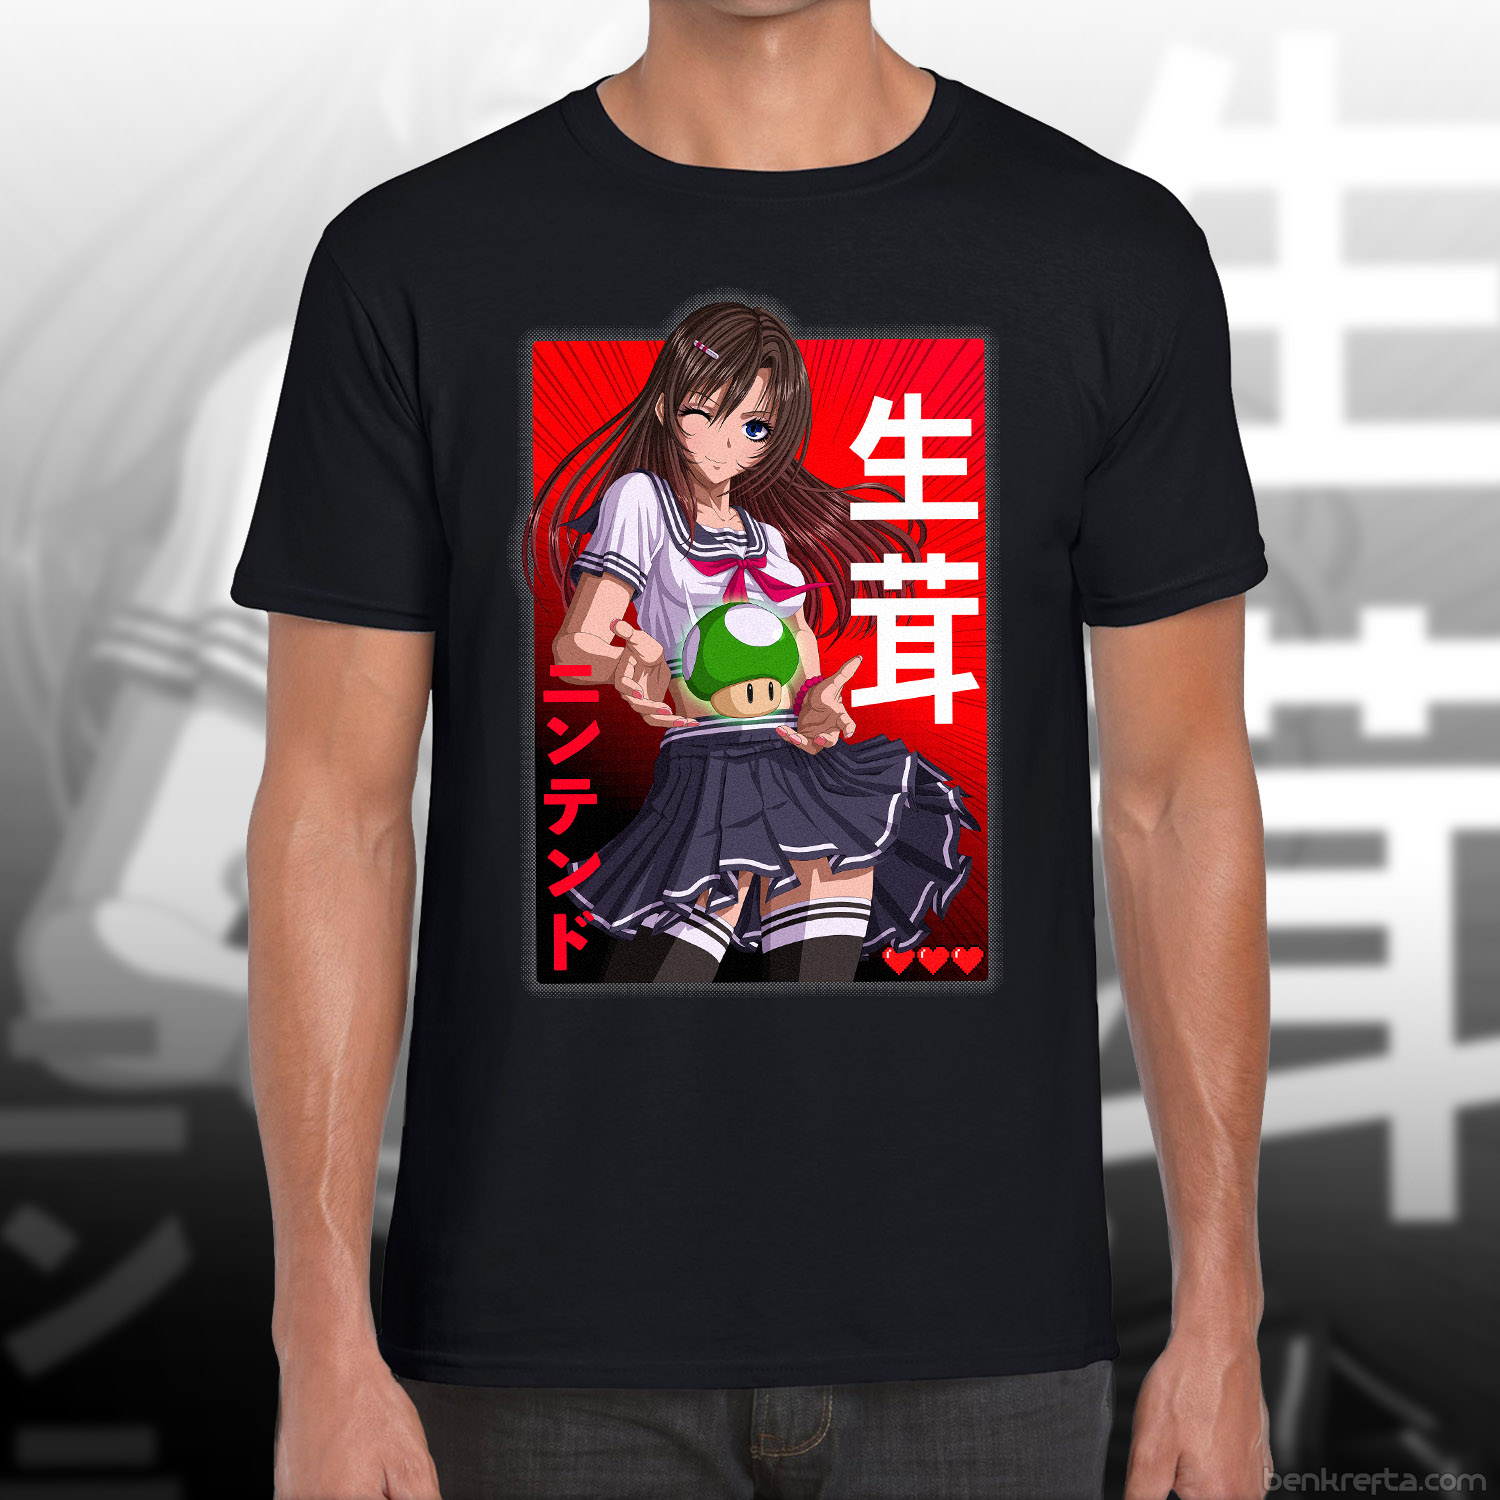 Women's Anime Tees & Shirts | Hot Topic